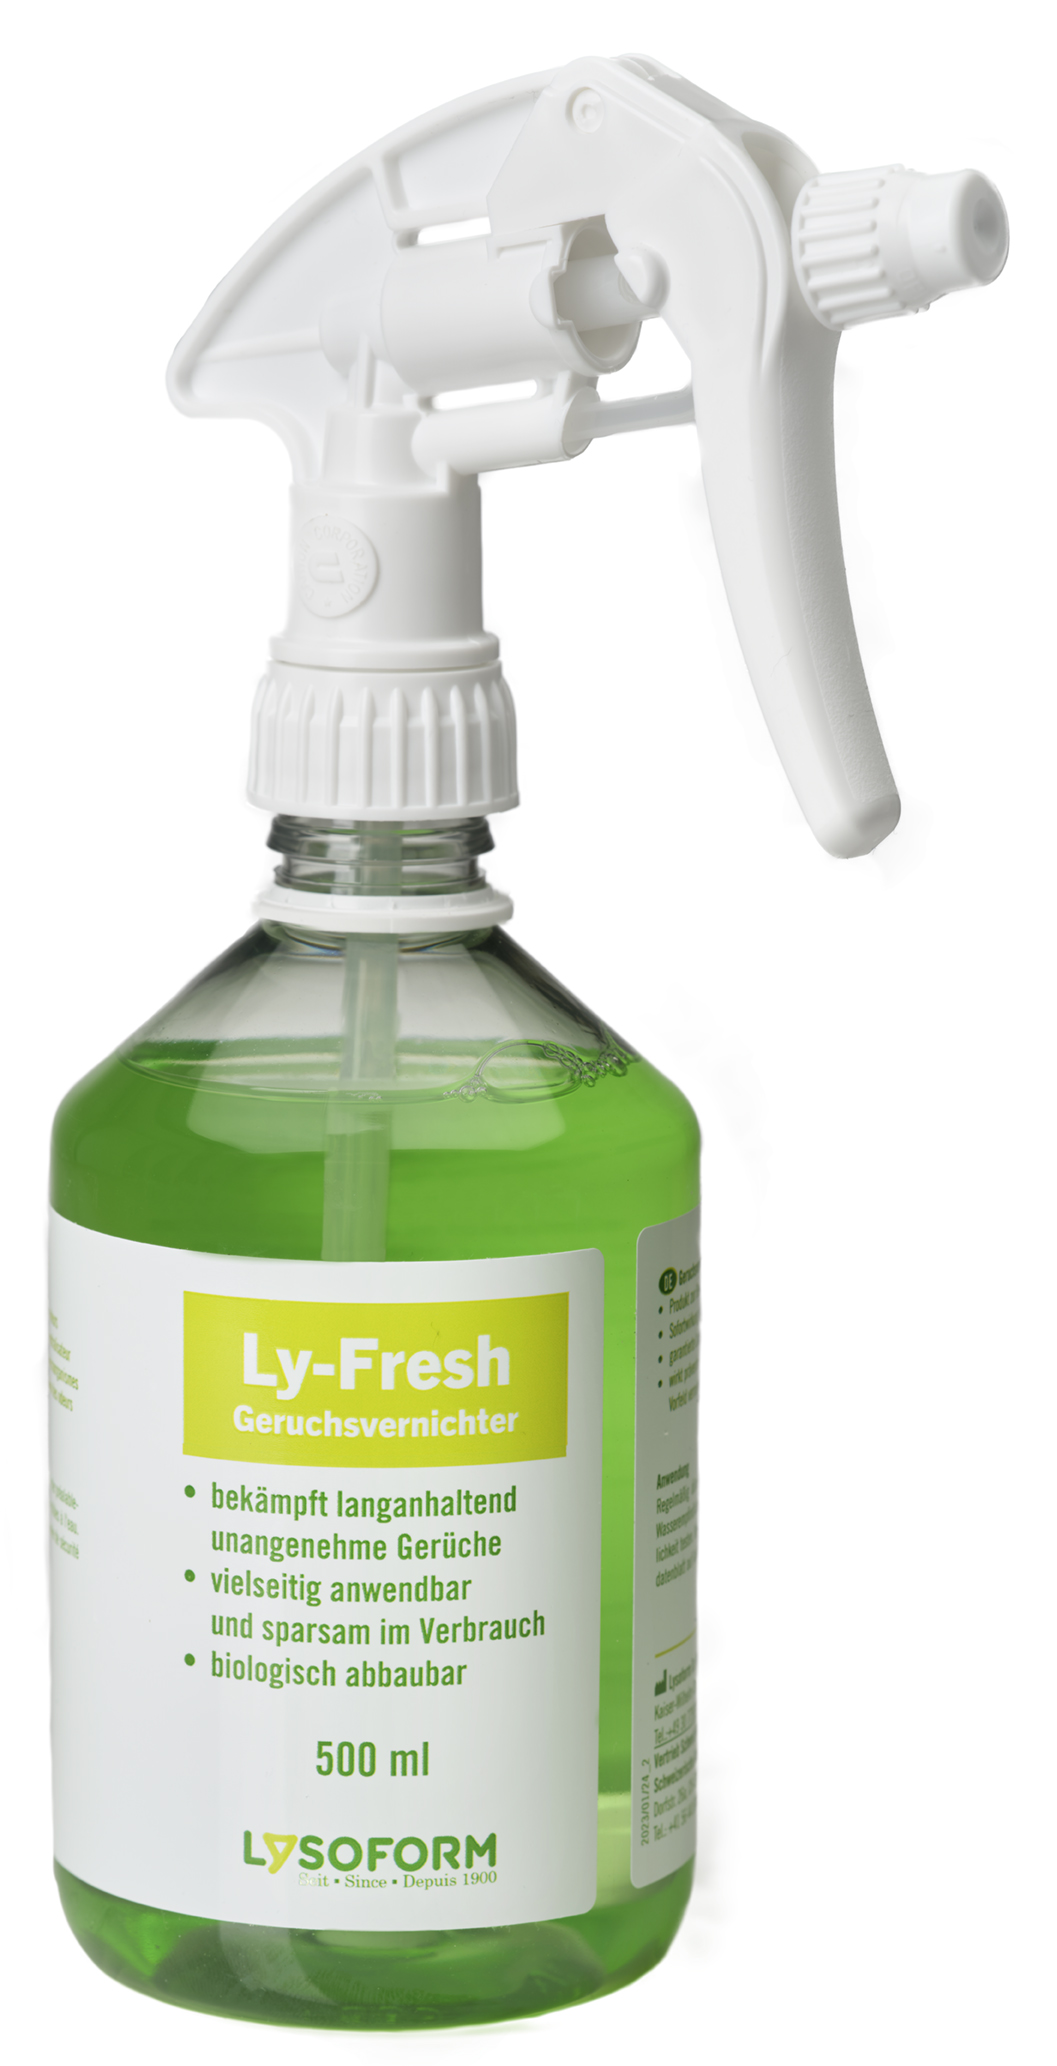 Ly-Fresh Geruchsvernichter Spray